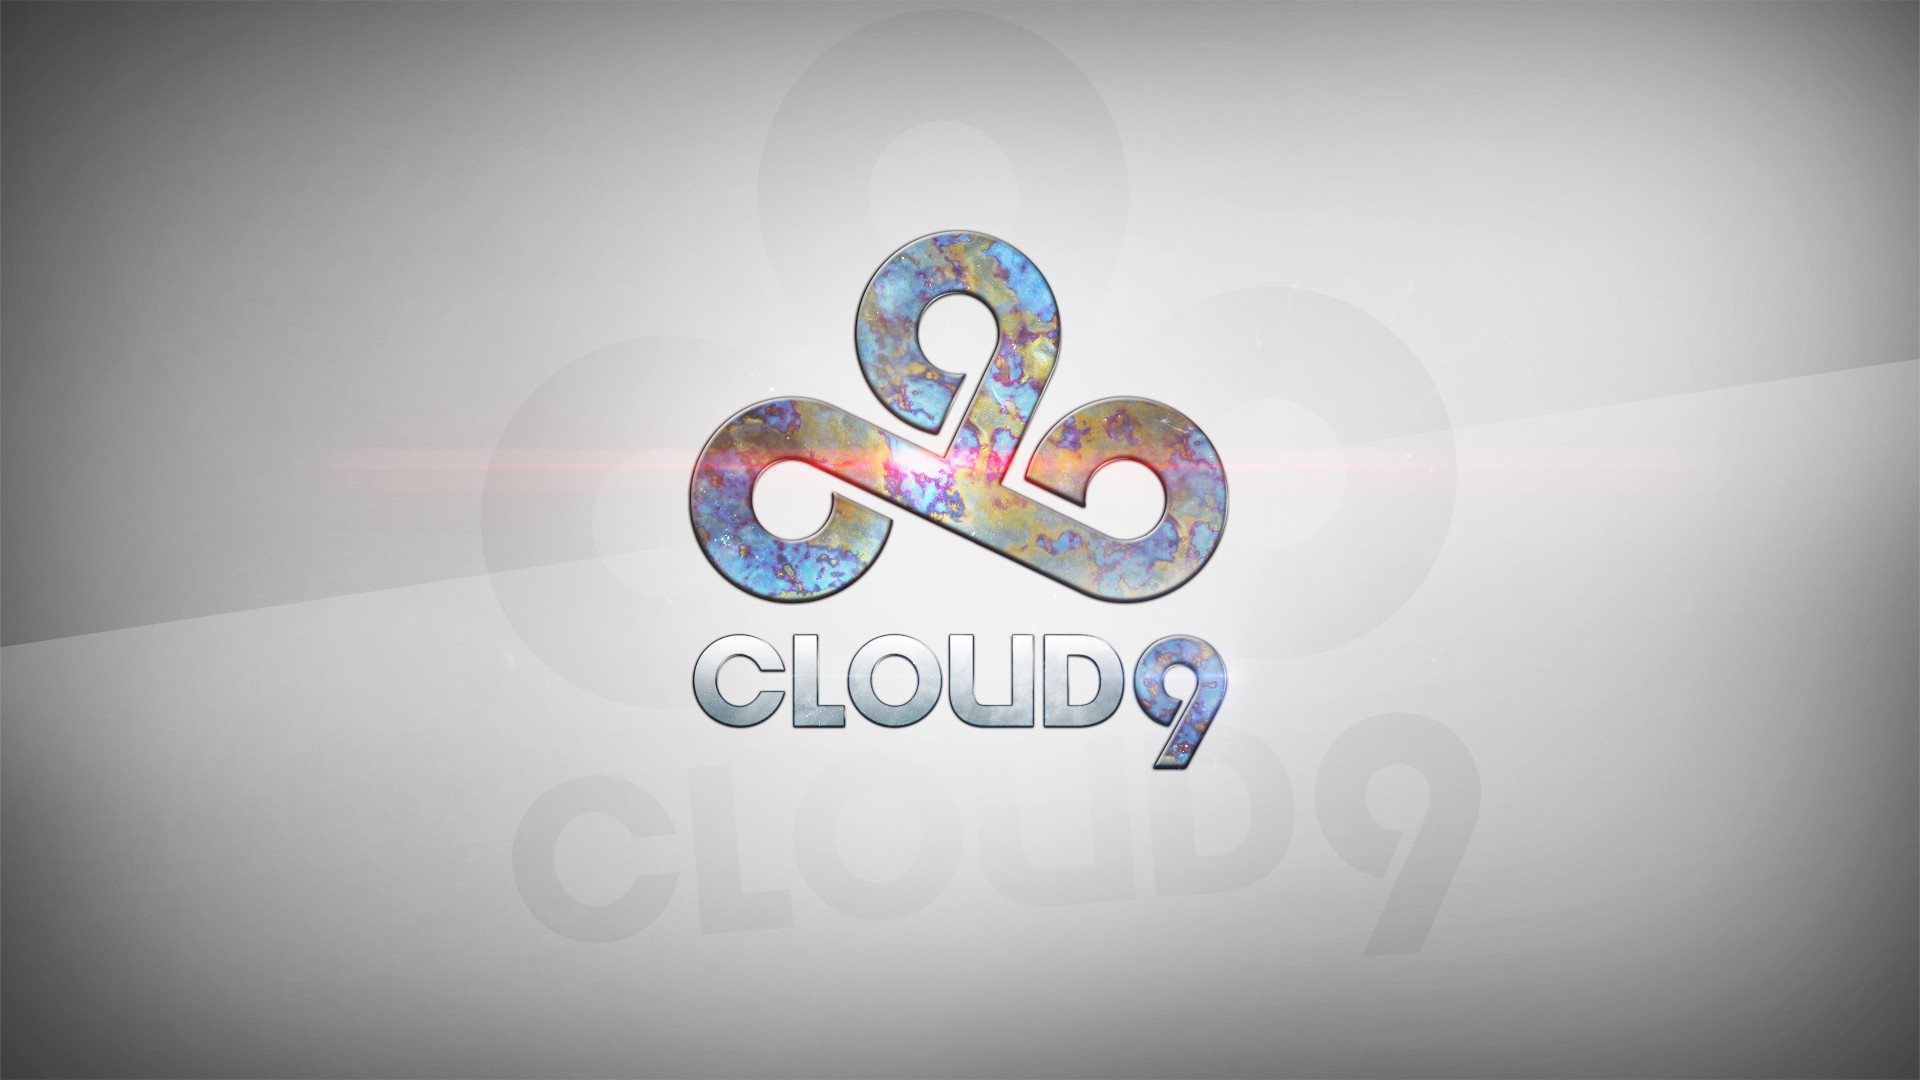 Cloud 9 CSGO wallpaper case hardened